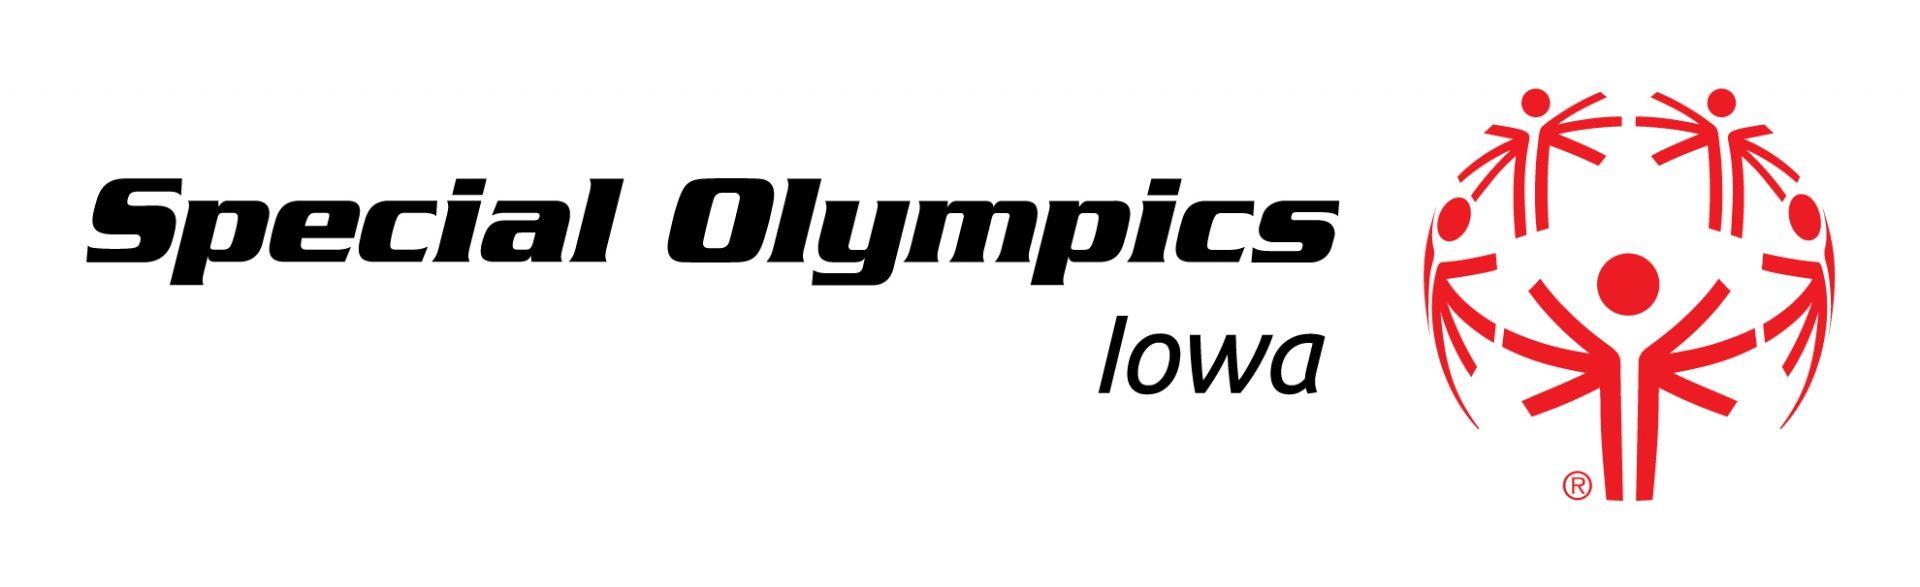 Special Logo - Logos - Special Olympics Iowa